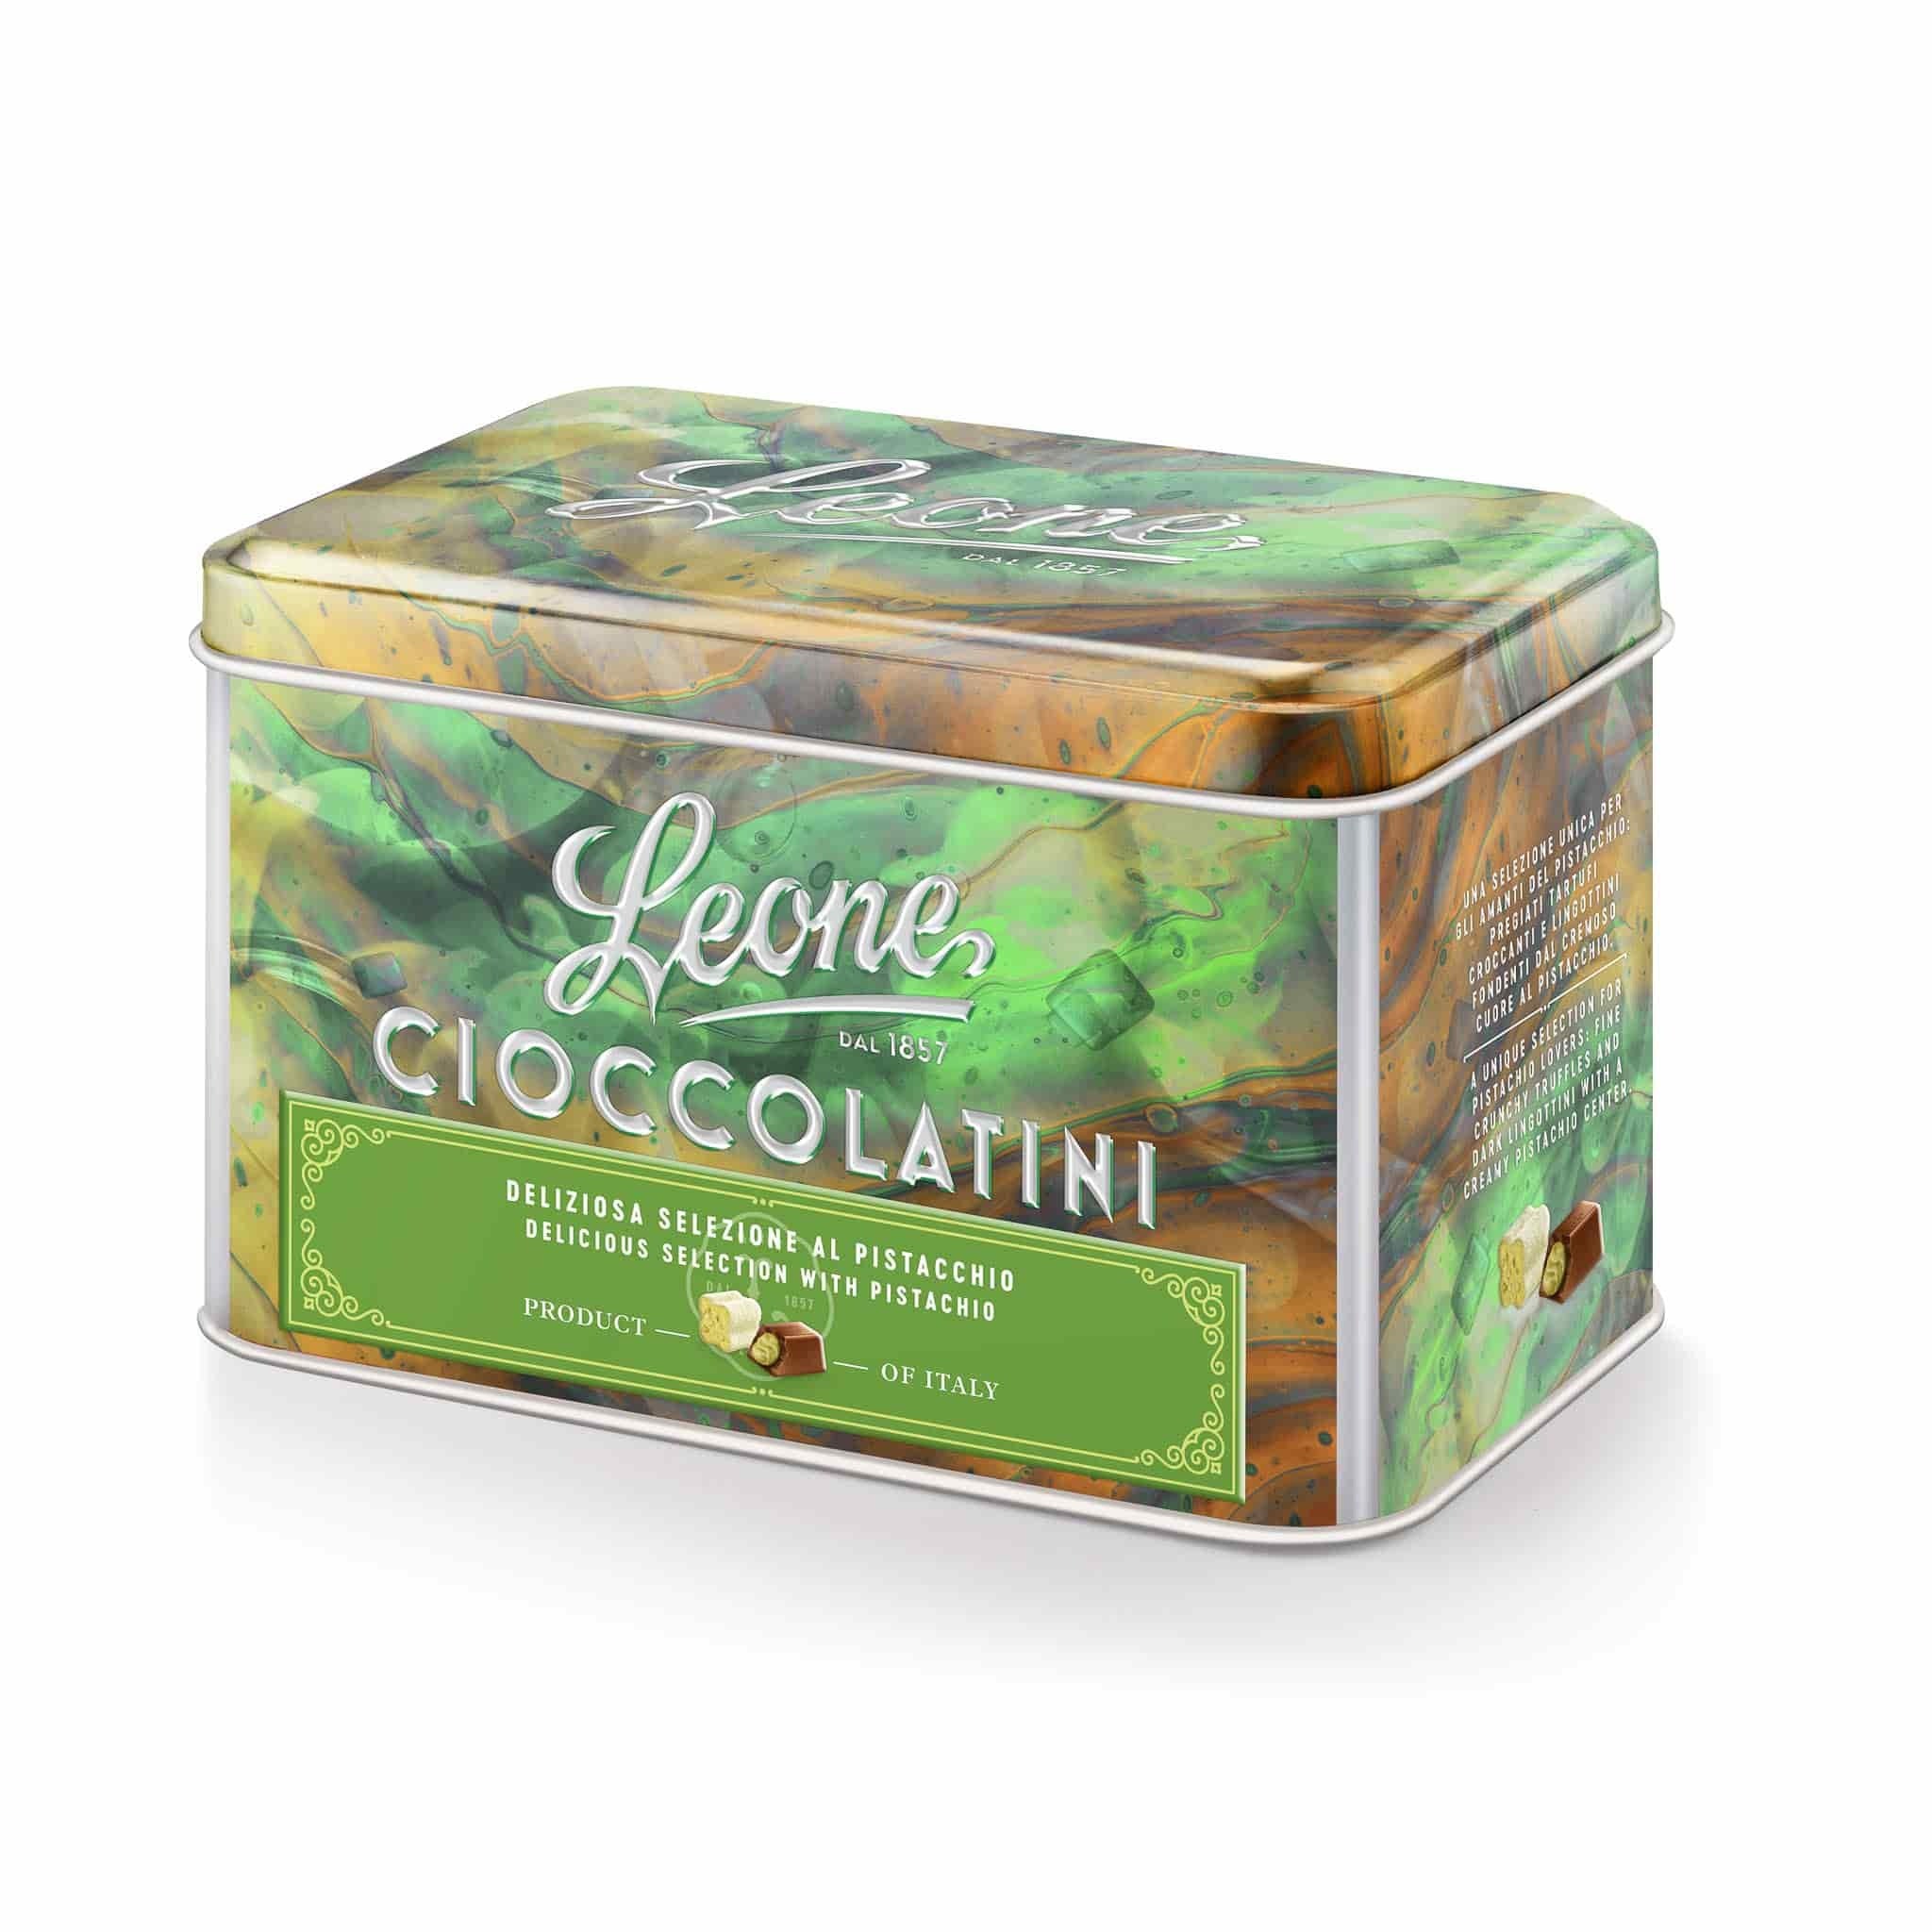 Leone Pistachio Chocolate Tin, 150g